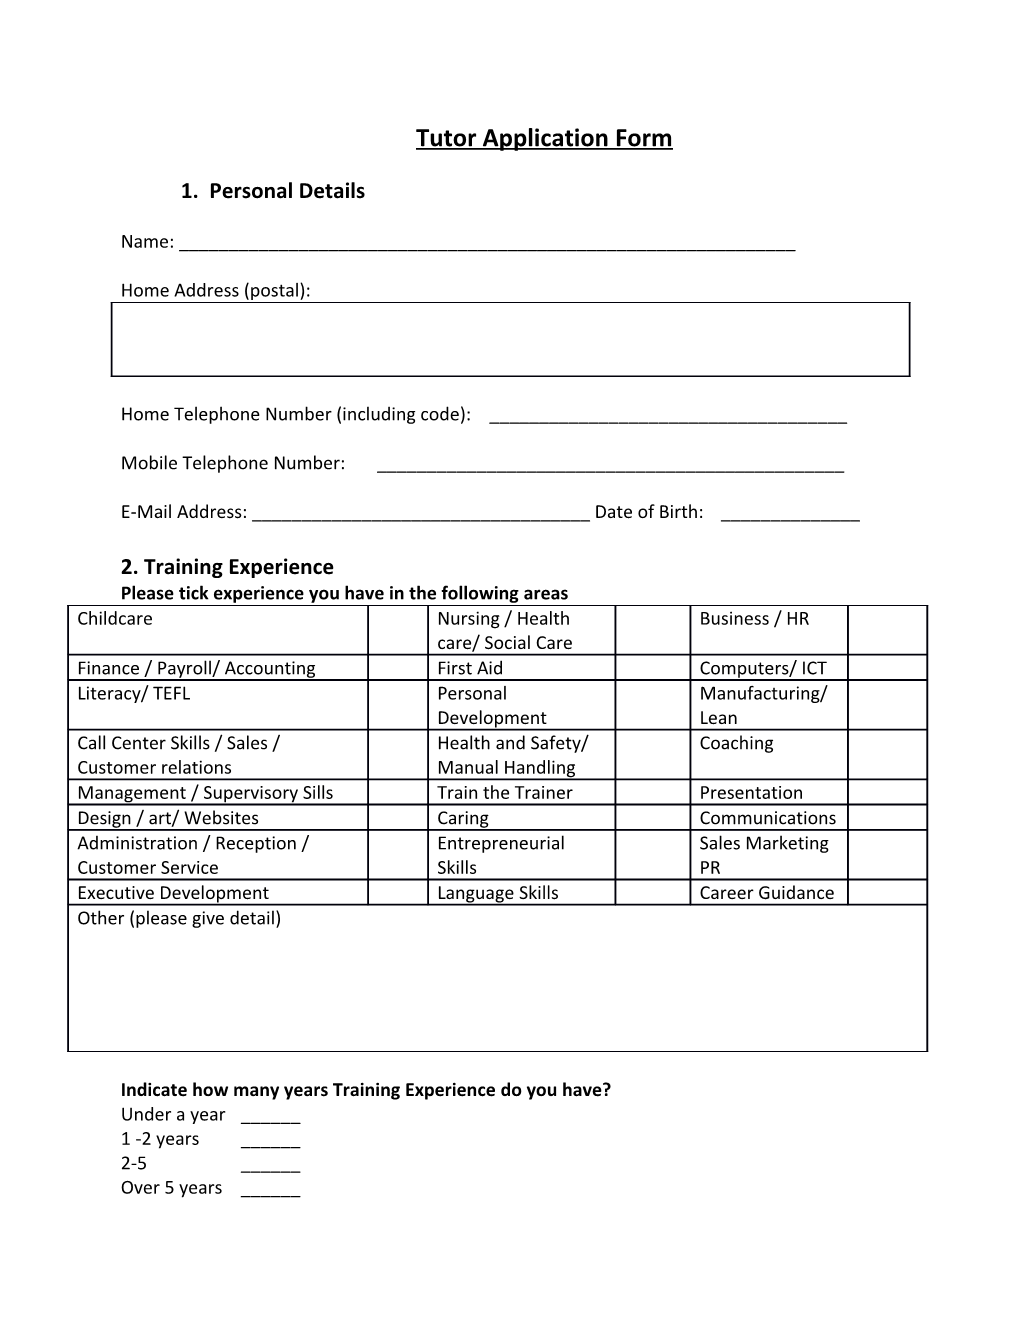 Tutor Application Form